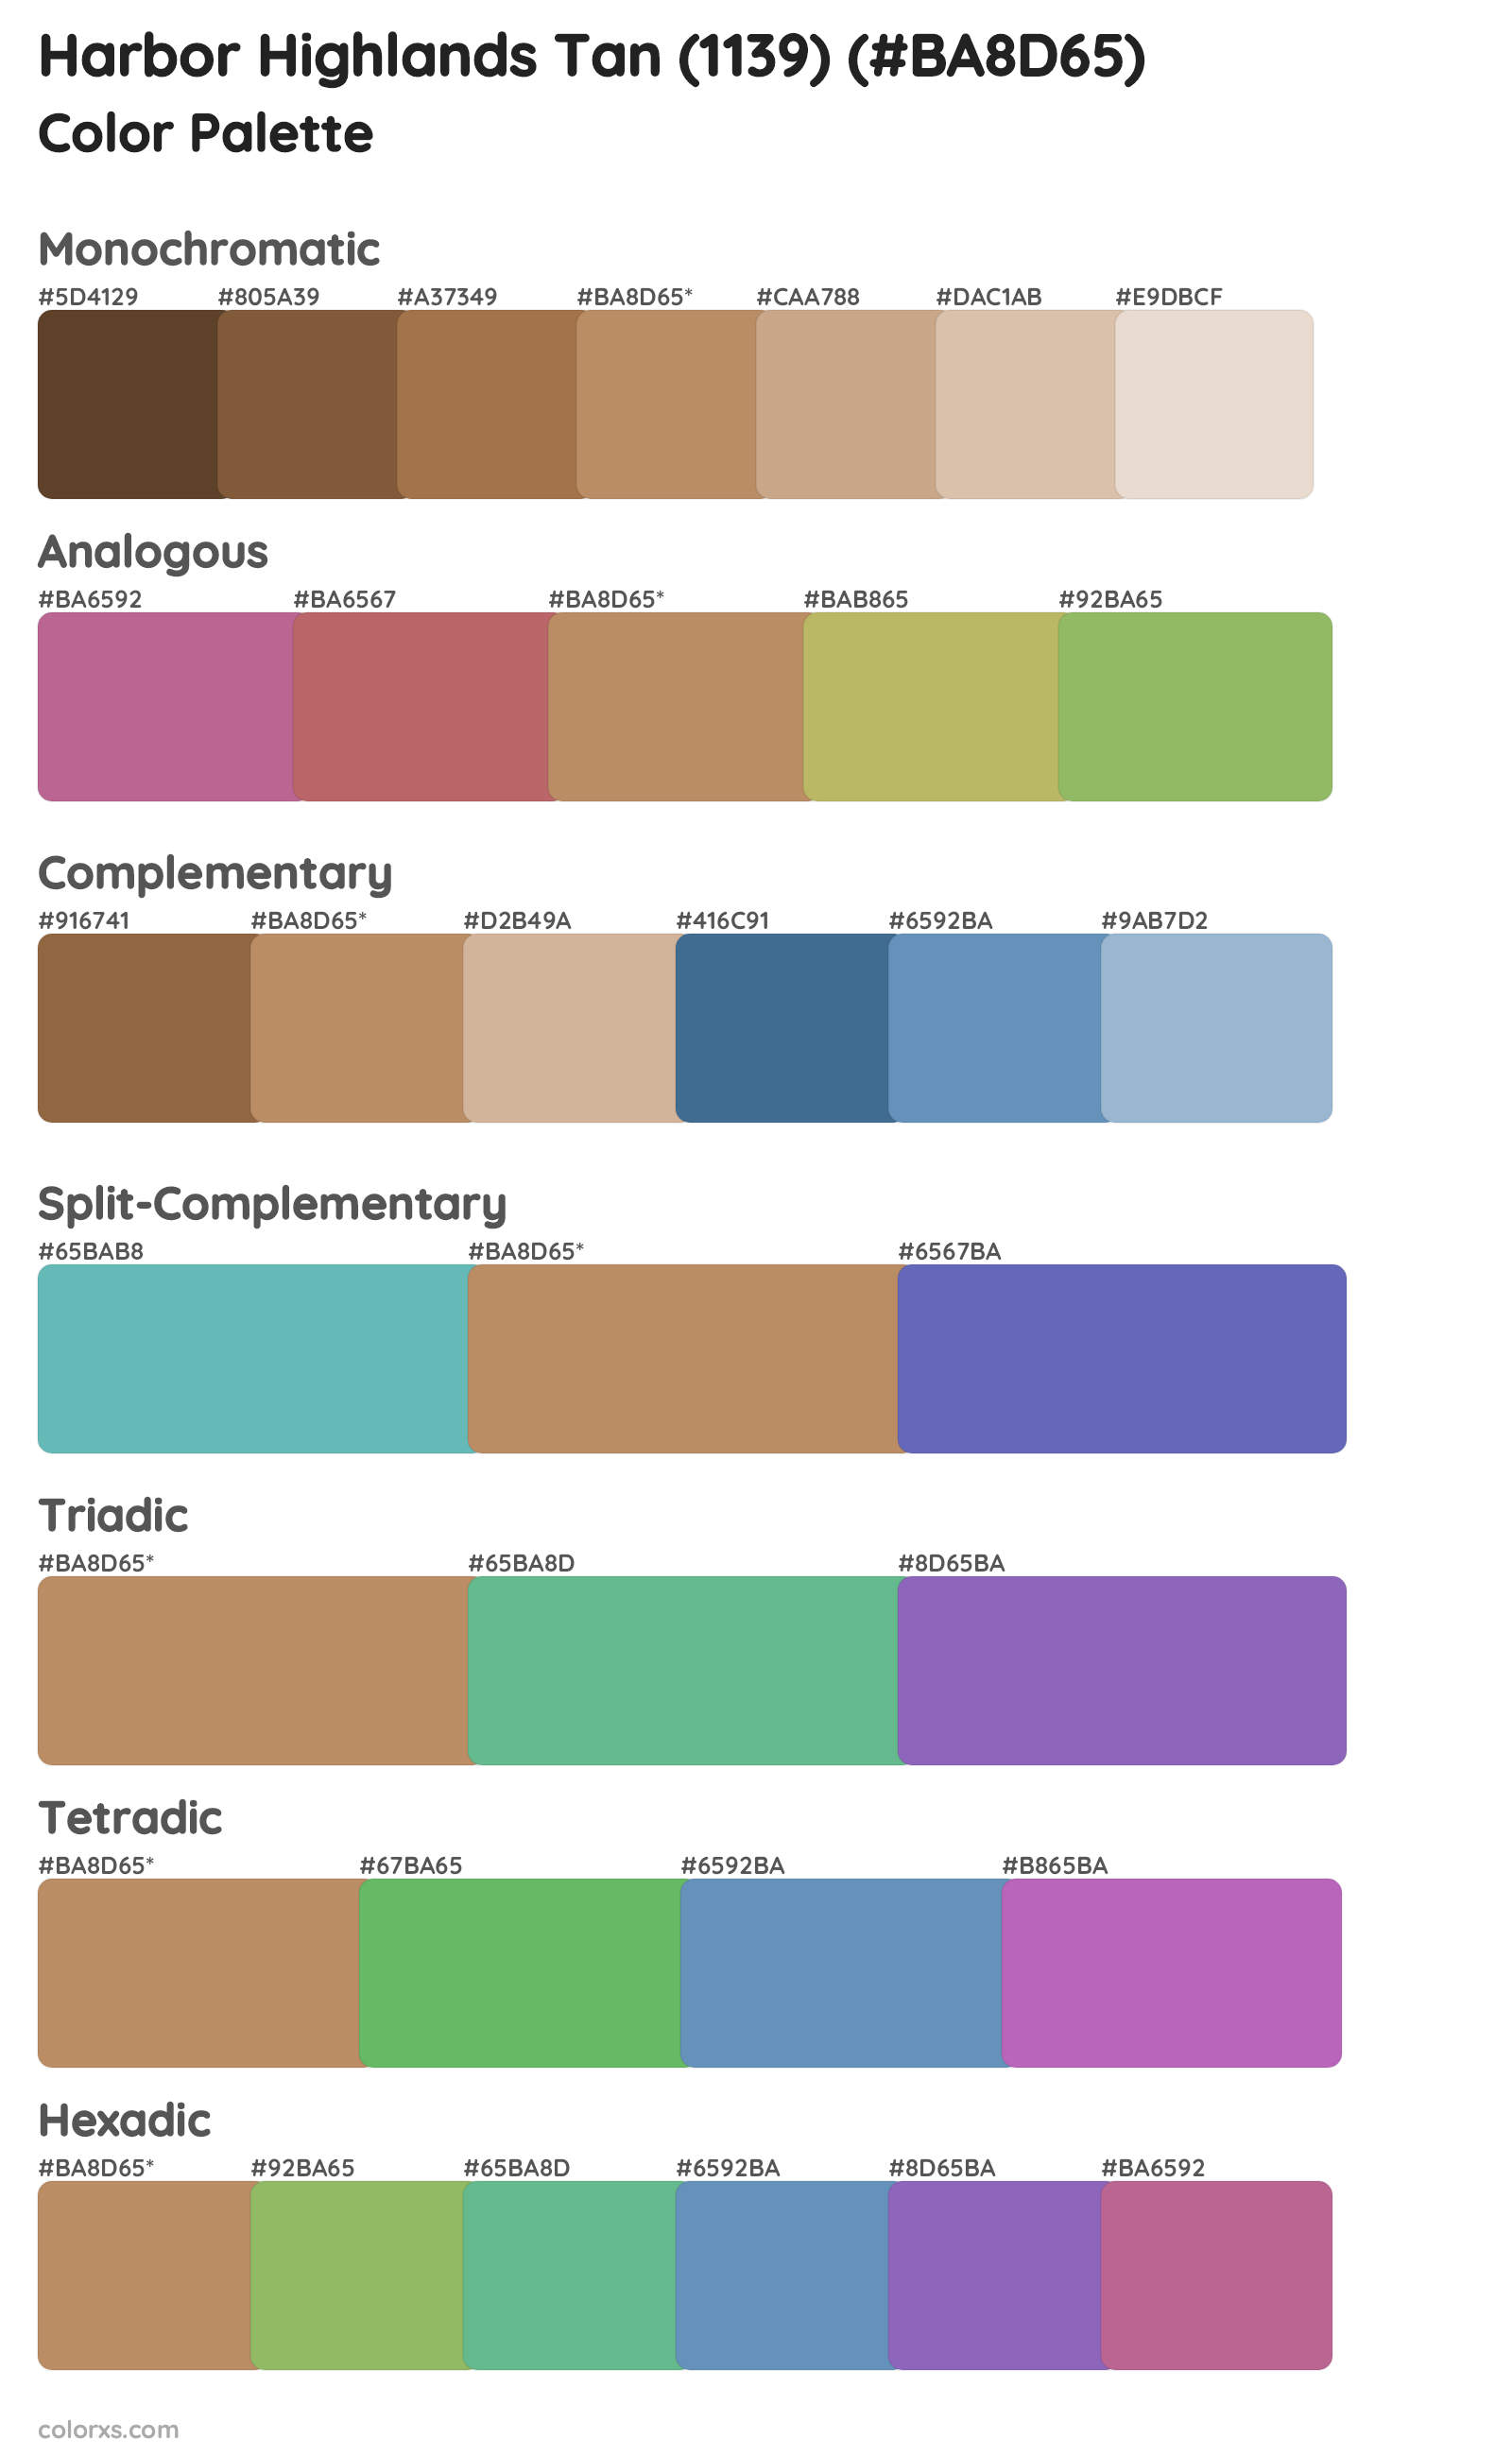 Harbor Highlands Tan (1139) Color Scheme Palettes